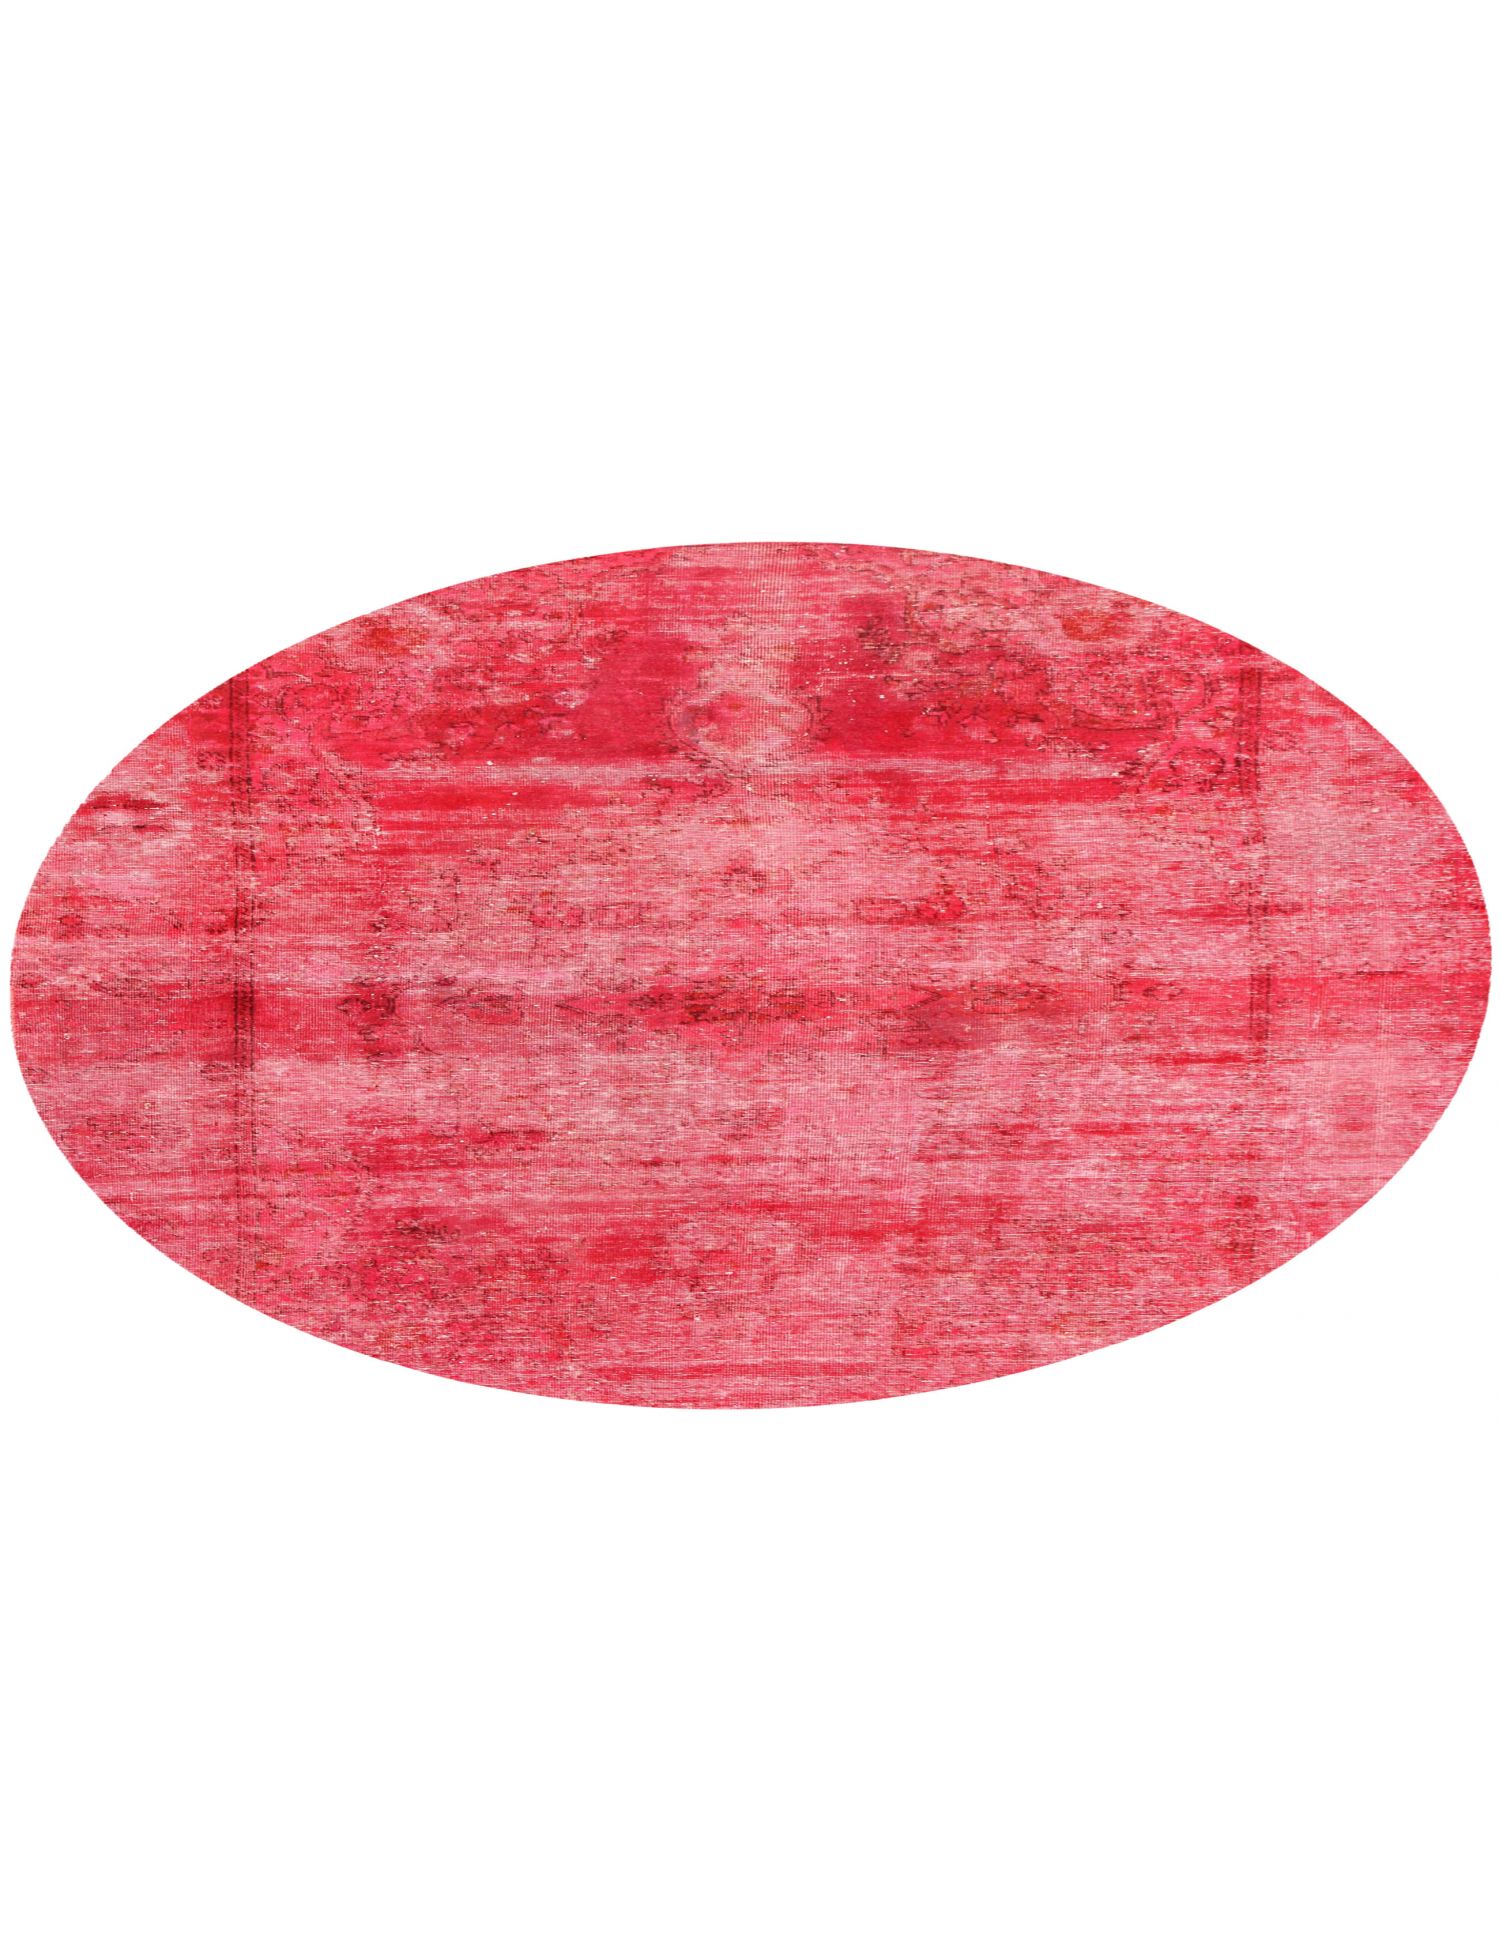 Persialaiset vintage matot  punainen <br/>182 x 182 cm